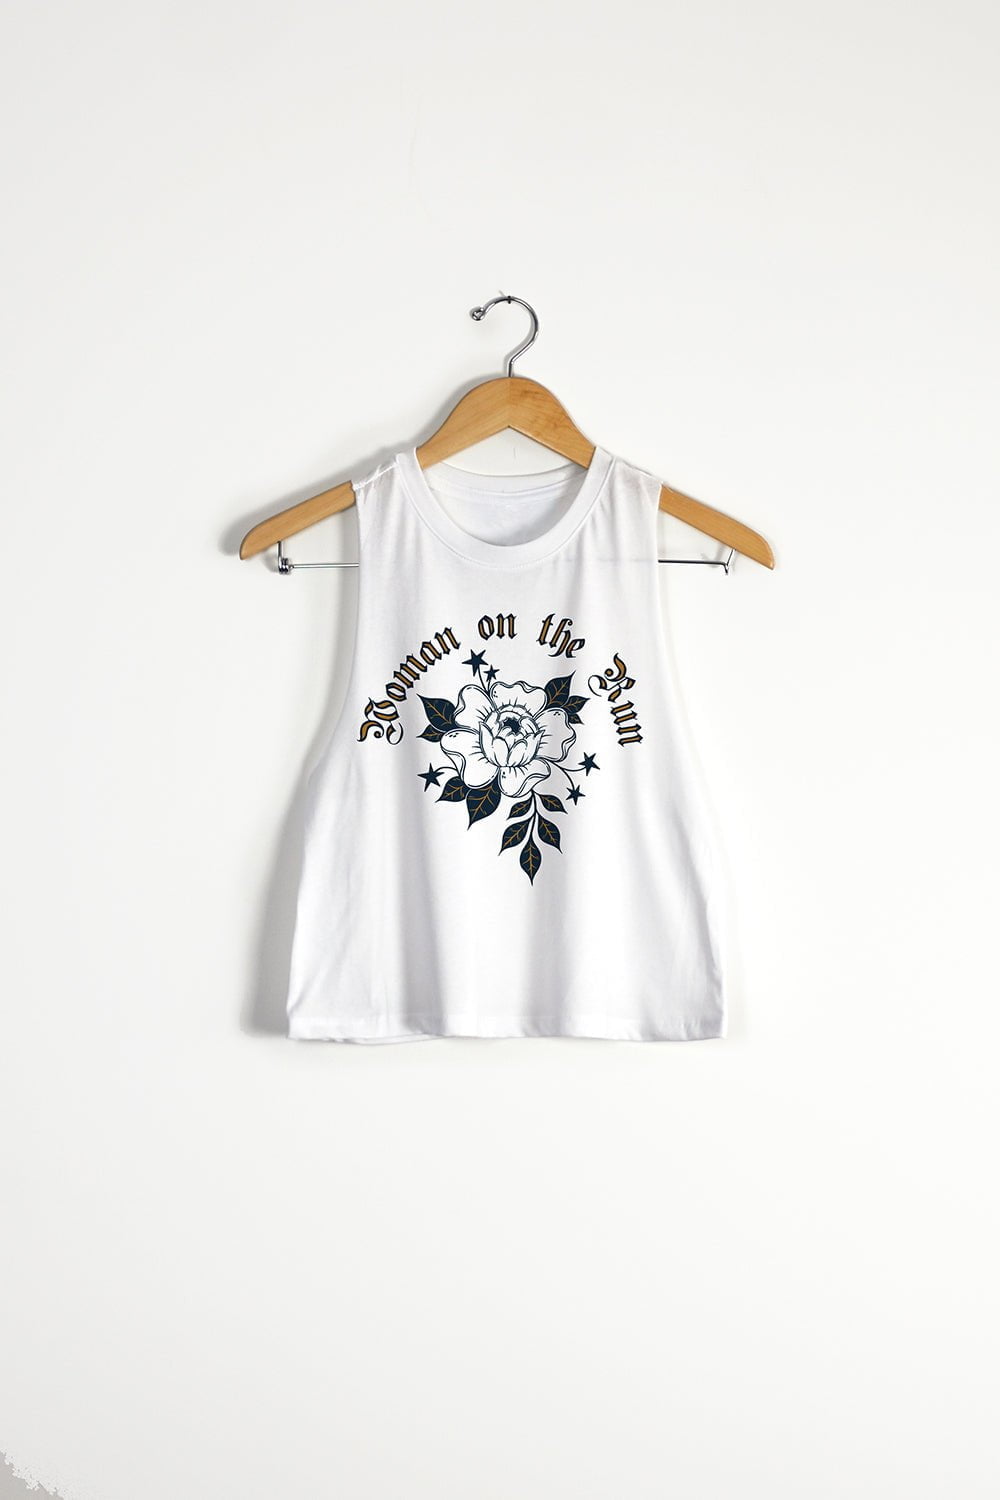 Sarah Marie Design Studio Shirts & Tops Small / White Woman on the Run Racerback Crop Tank